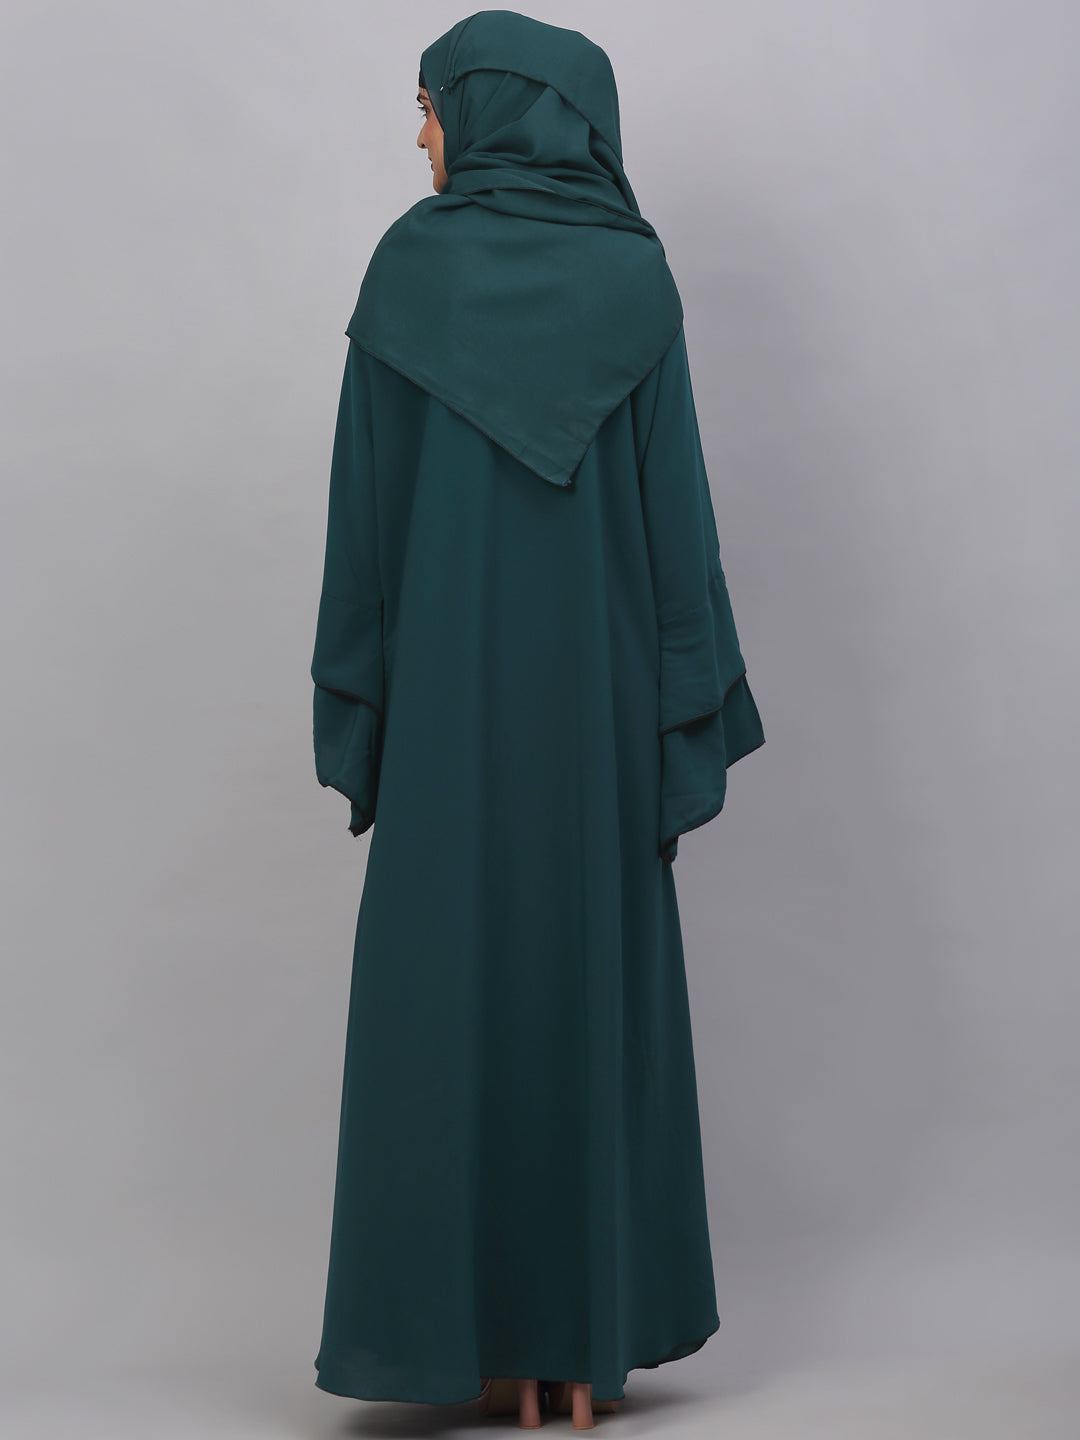 Klotthe Women Turq Embellished Burqa With Scarves